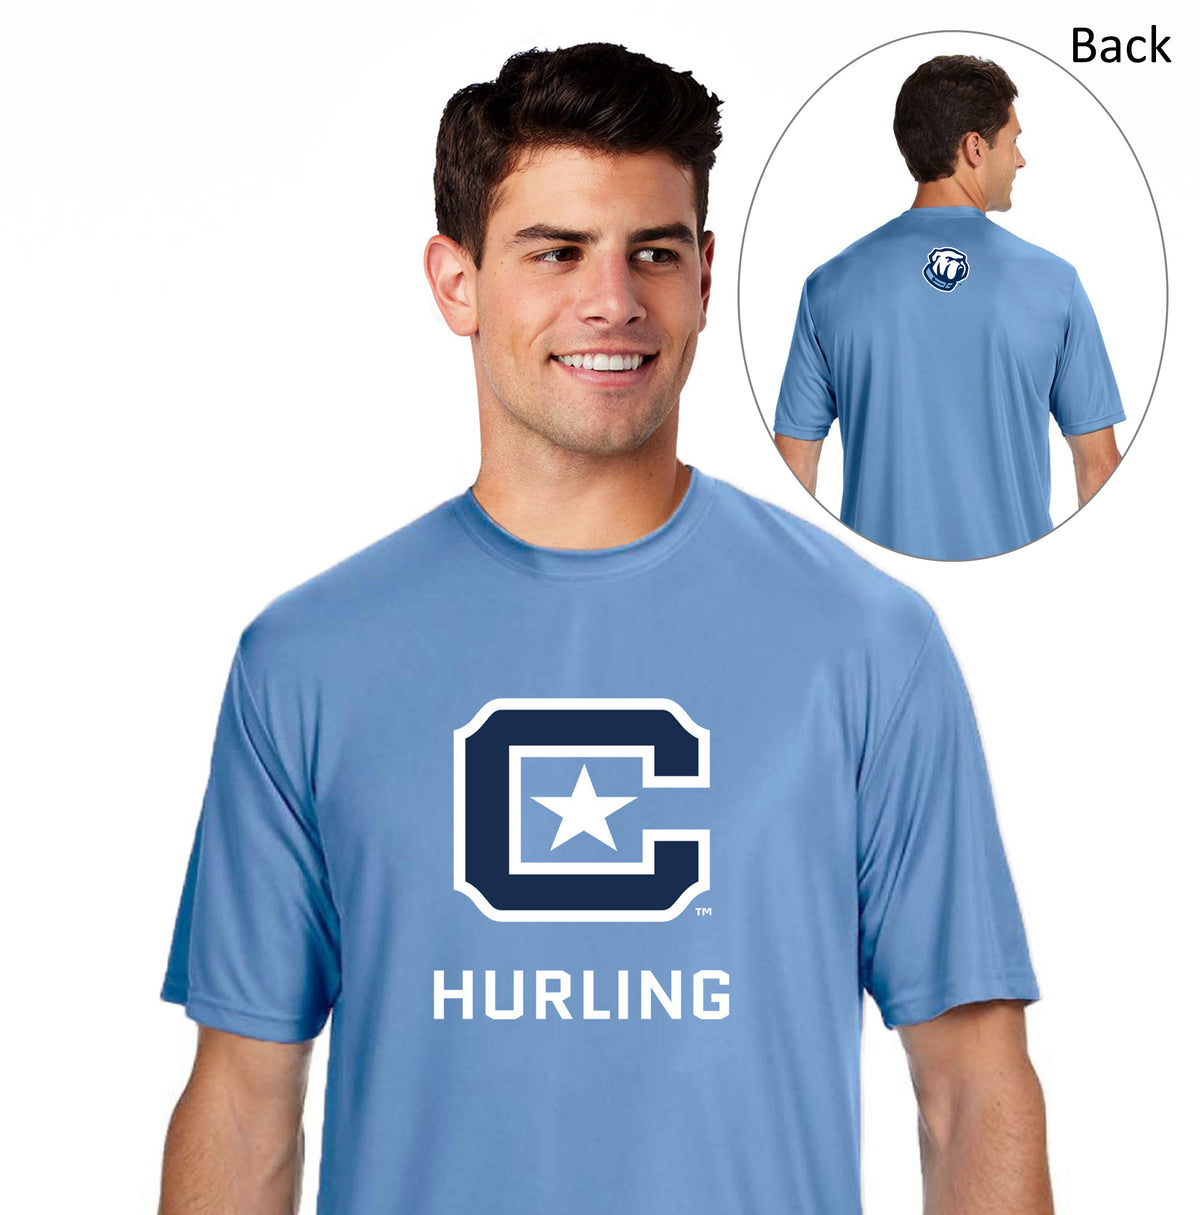 The Citadel, Club Sports - Hurling,  A4 Men's Cooling Performance T-Shirt